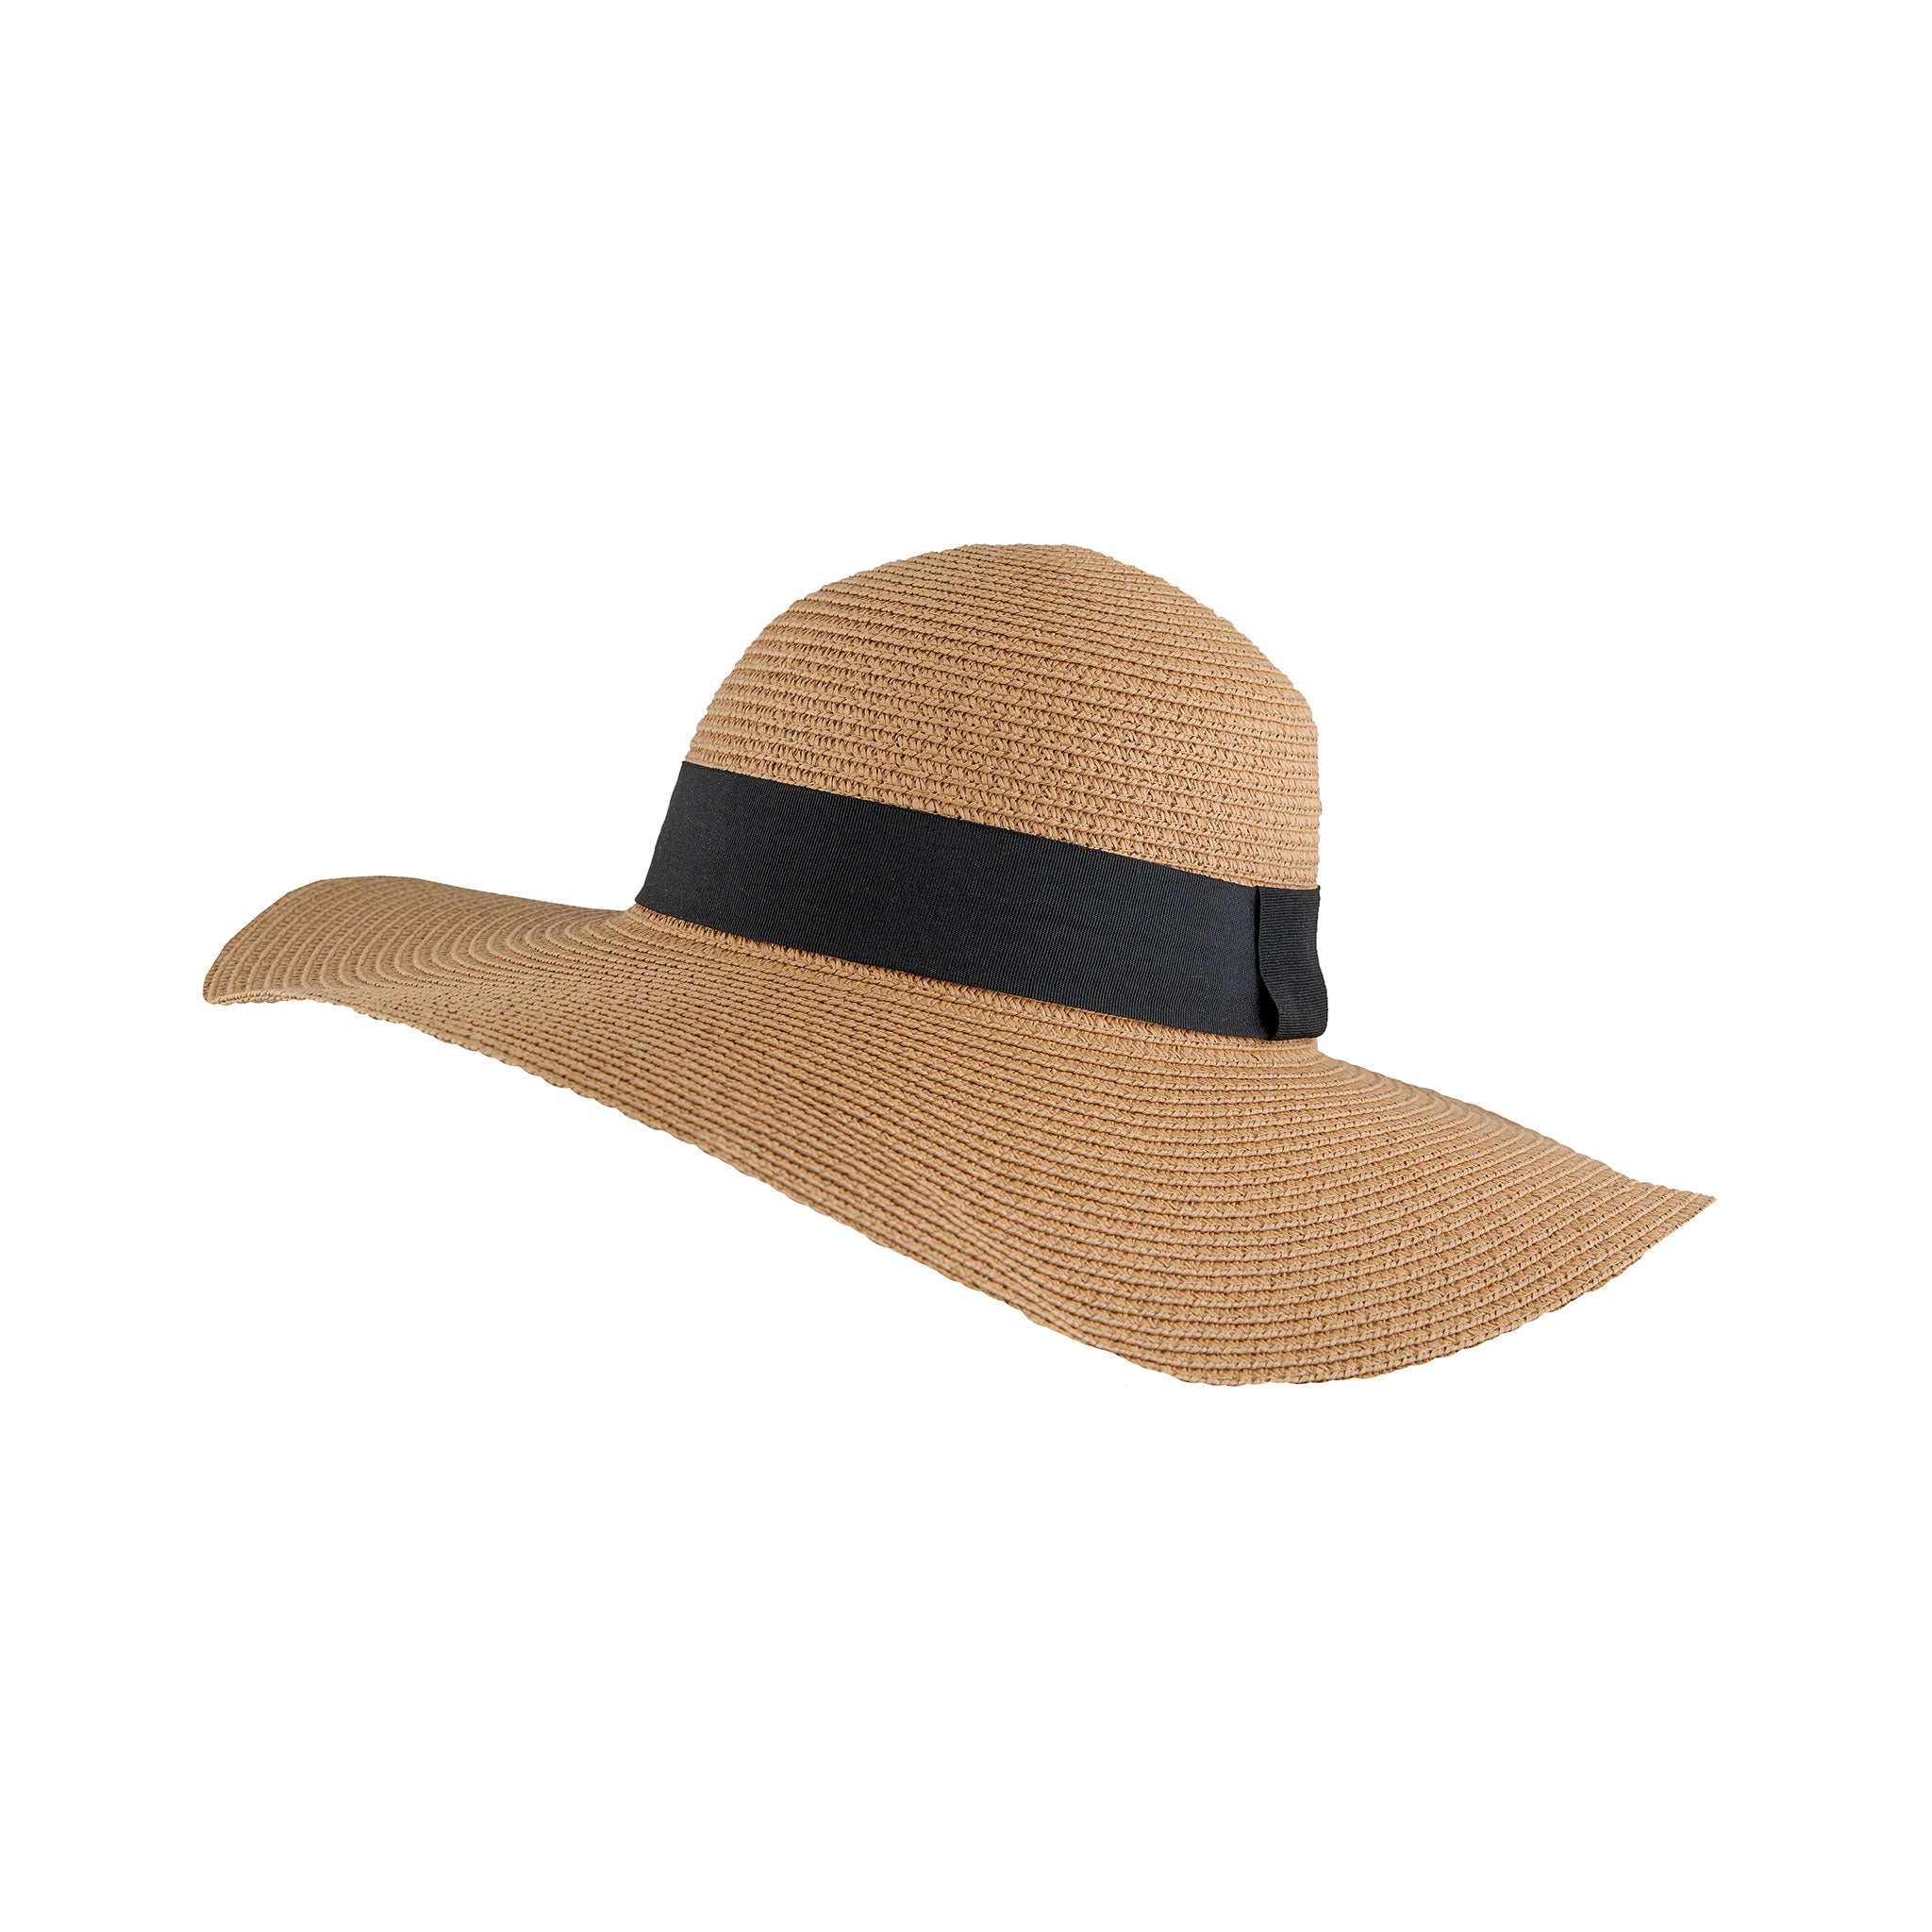 Women's Floppy Straw Sun Hat with Ribbon